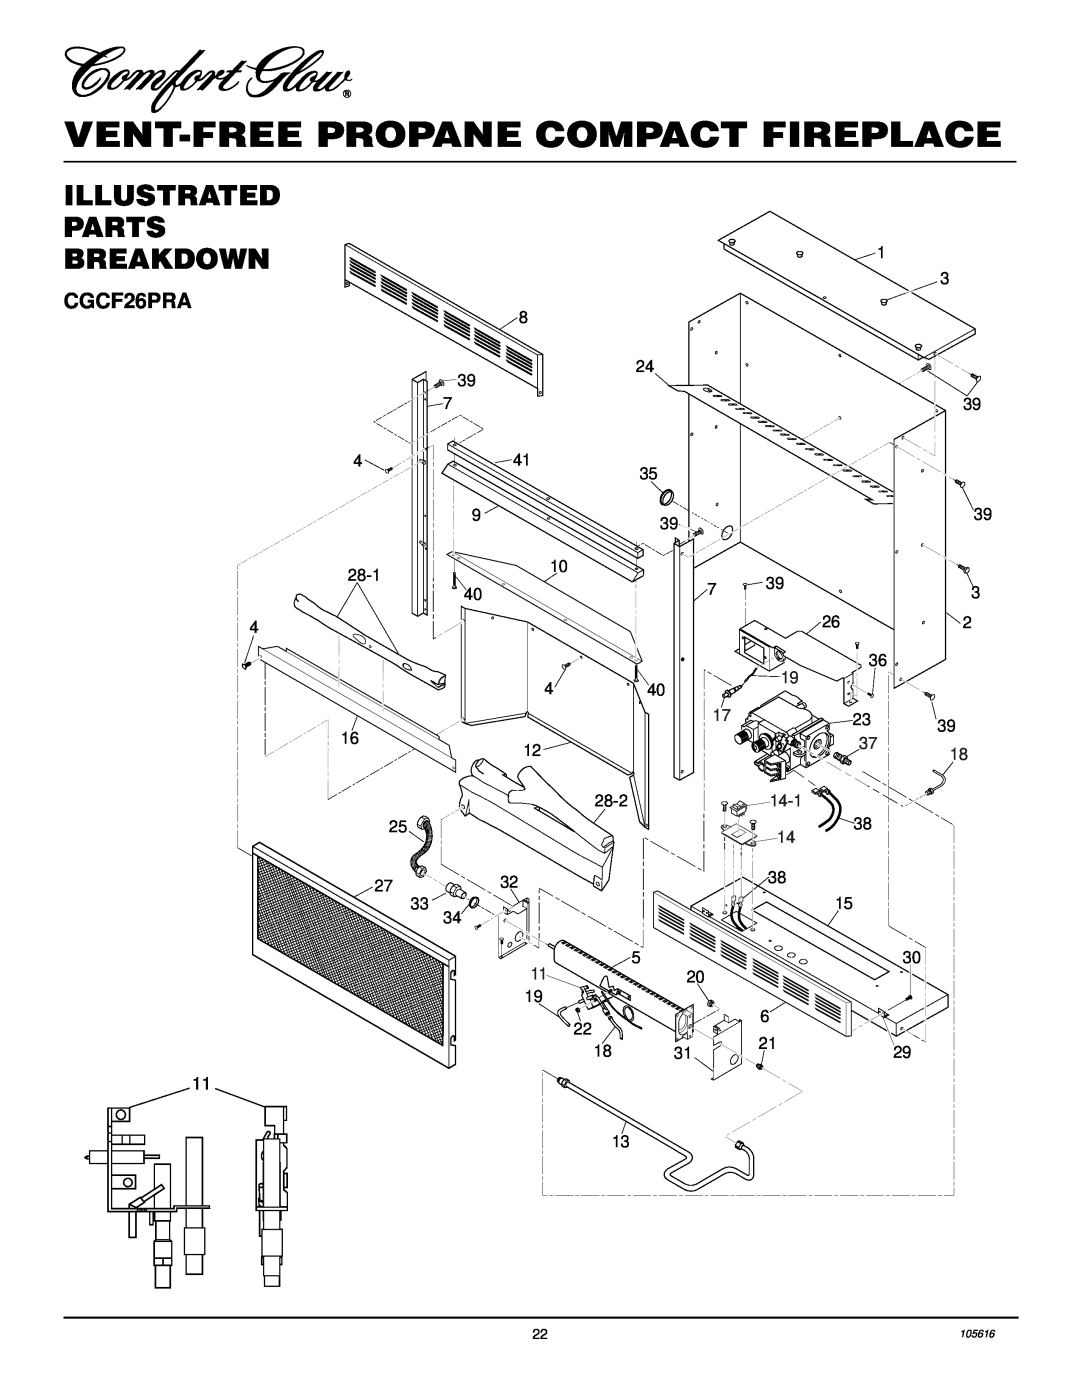 Desa CGCF26PRA installation manual Illustrated Parts Breakdown, Vent-Freepropane Compact Fireplace 